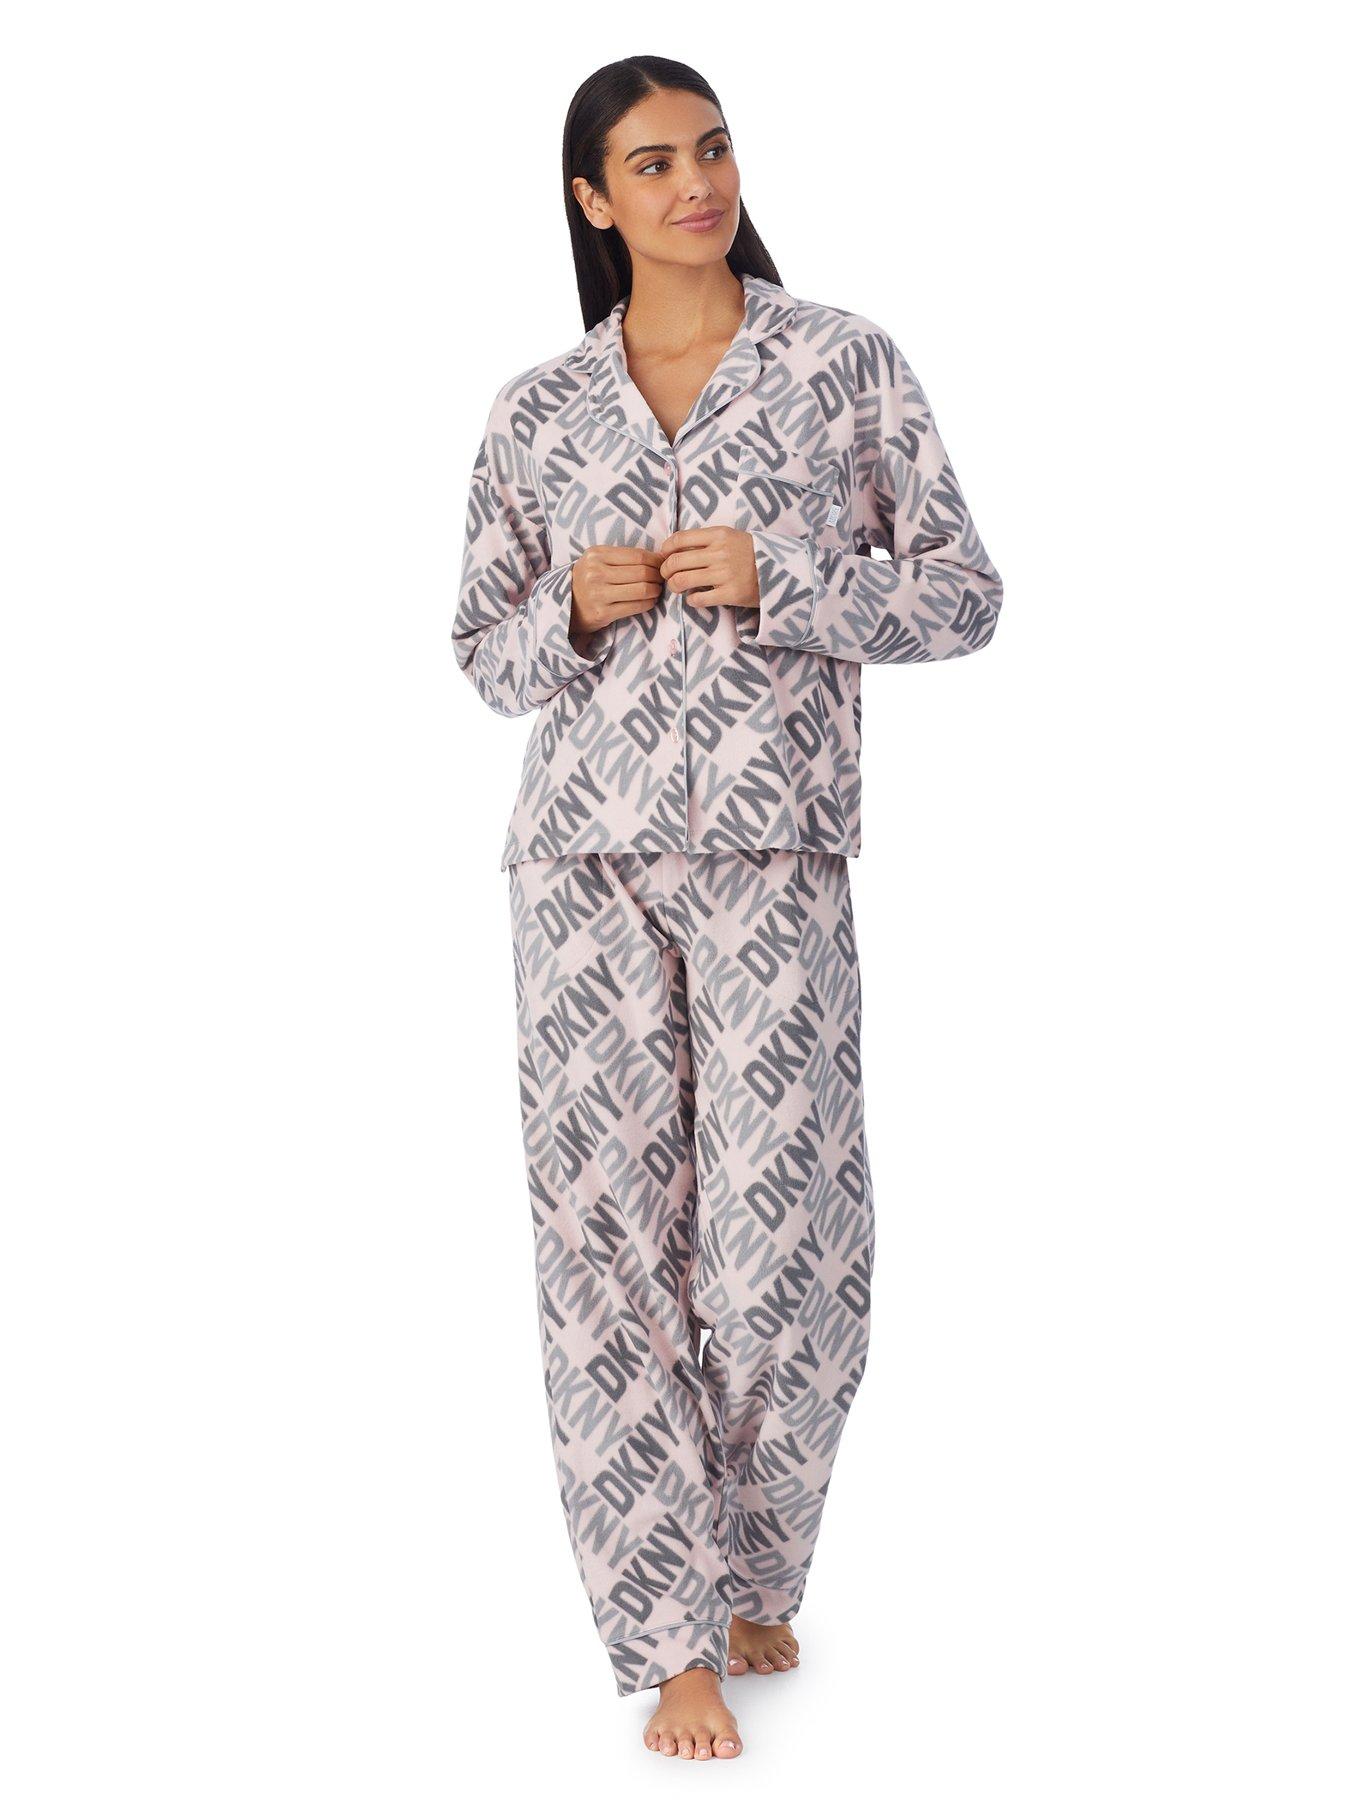 DKNY Signature Short Pyjama Set